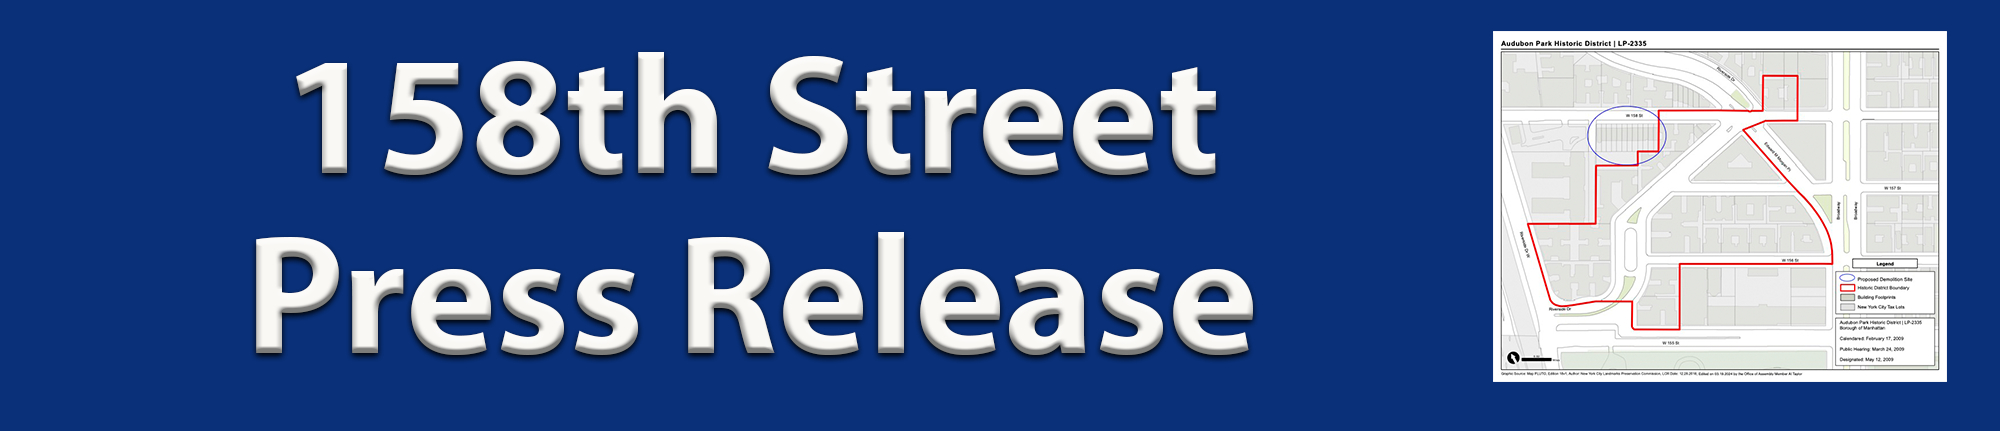 158th Street Press Release